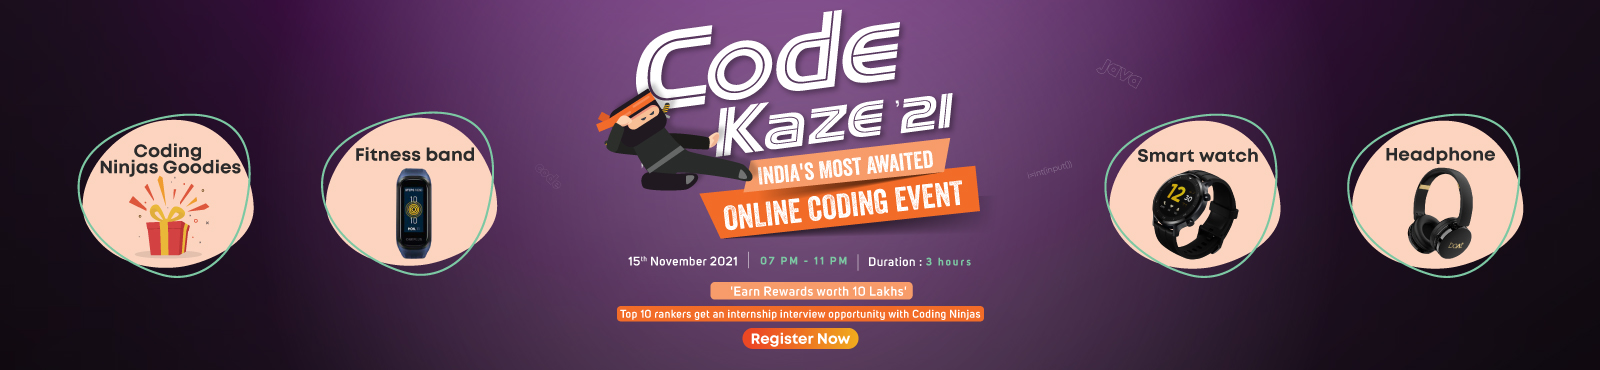 Coding Ninjas Code Kaze